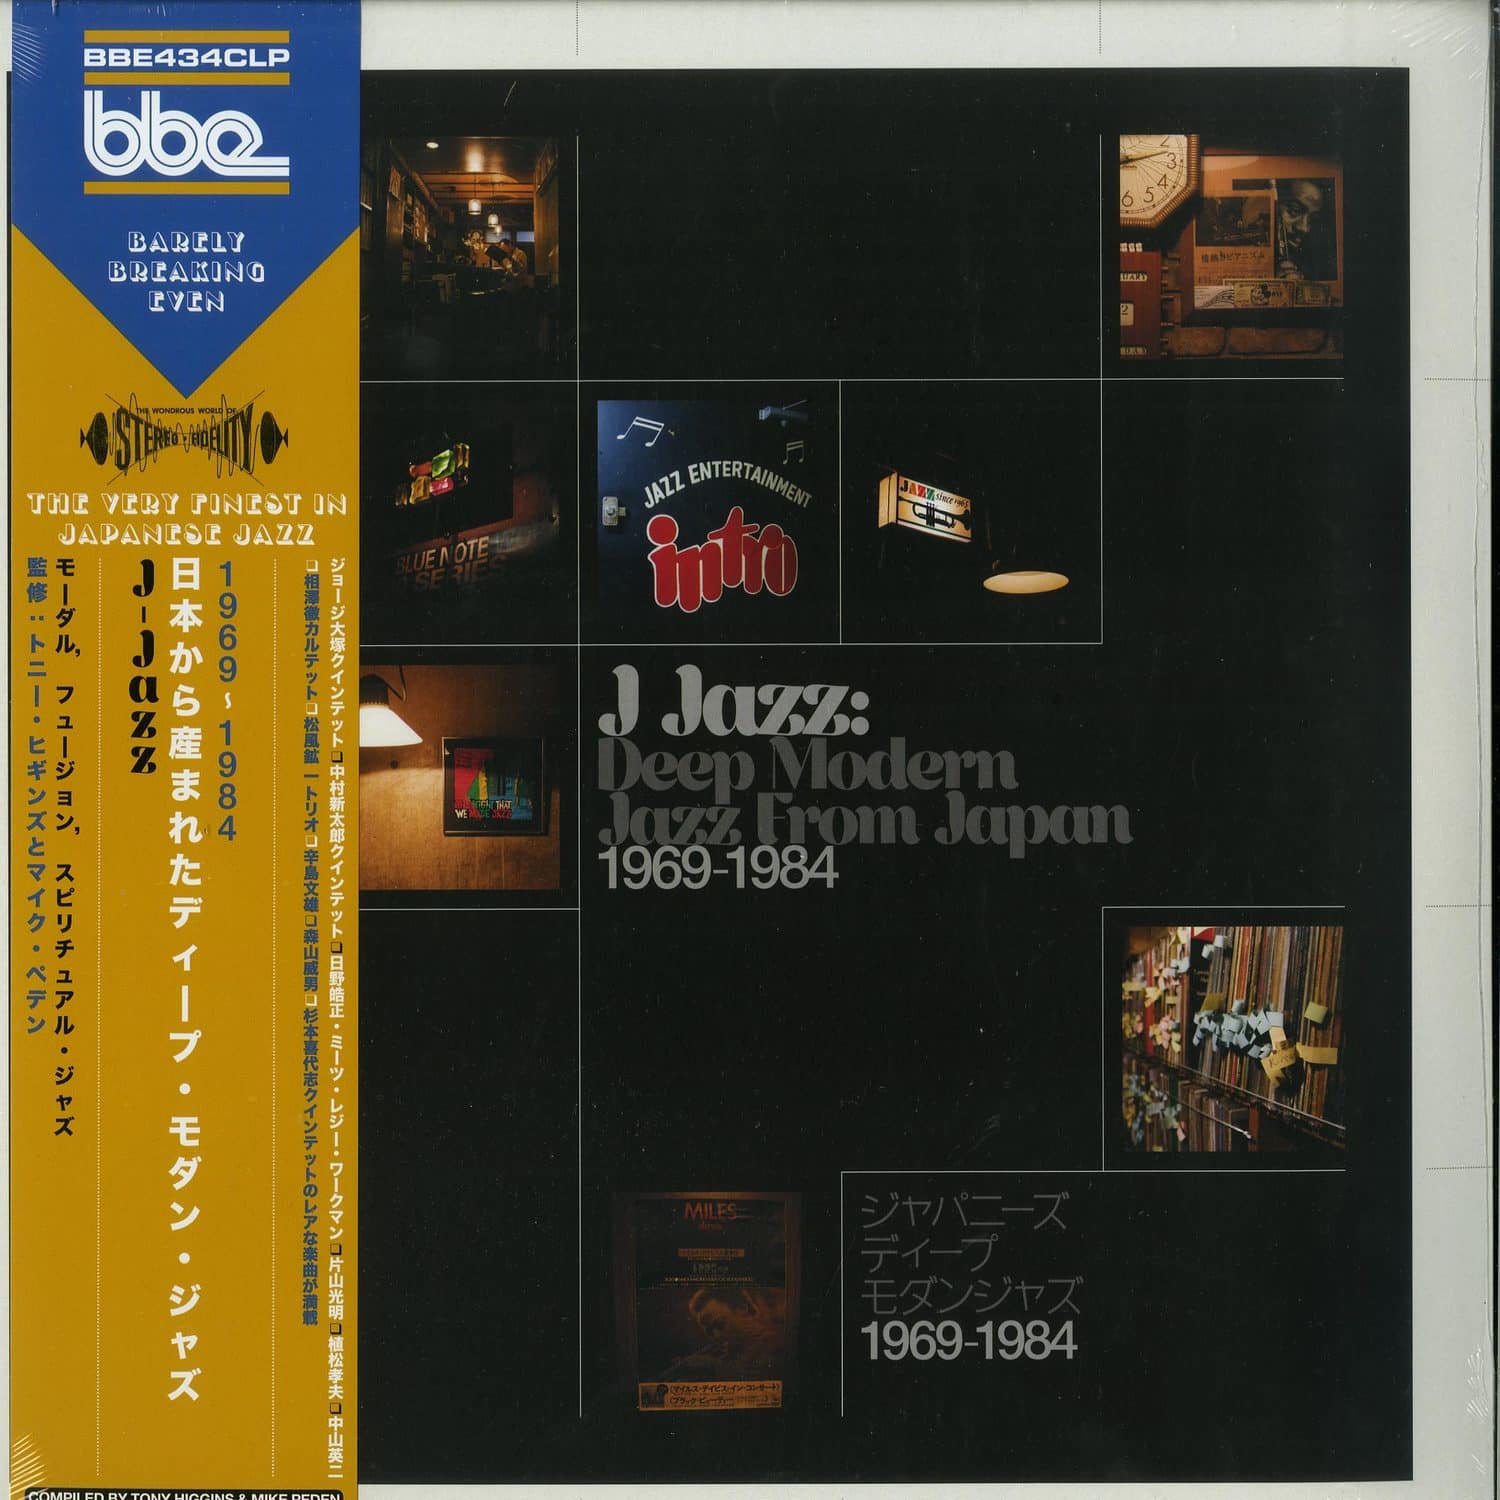 Various Artists - j-jazz - deep modern jazz from japan 1969-1984 (3x12 lp)